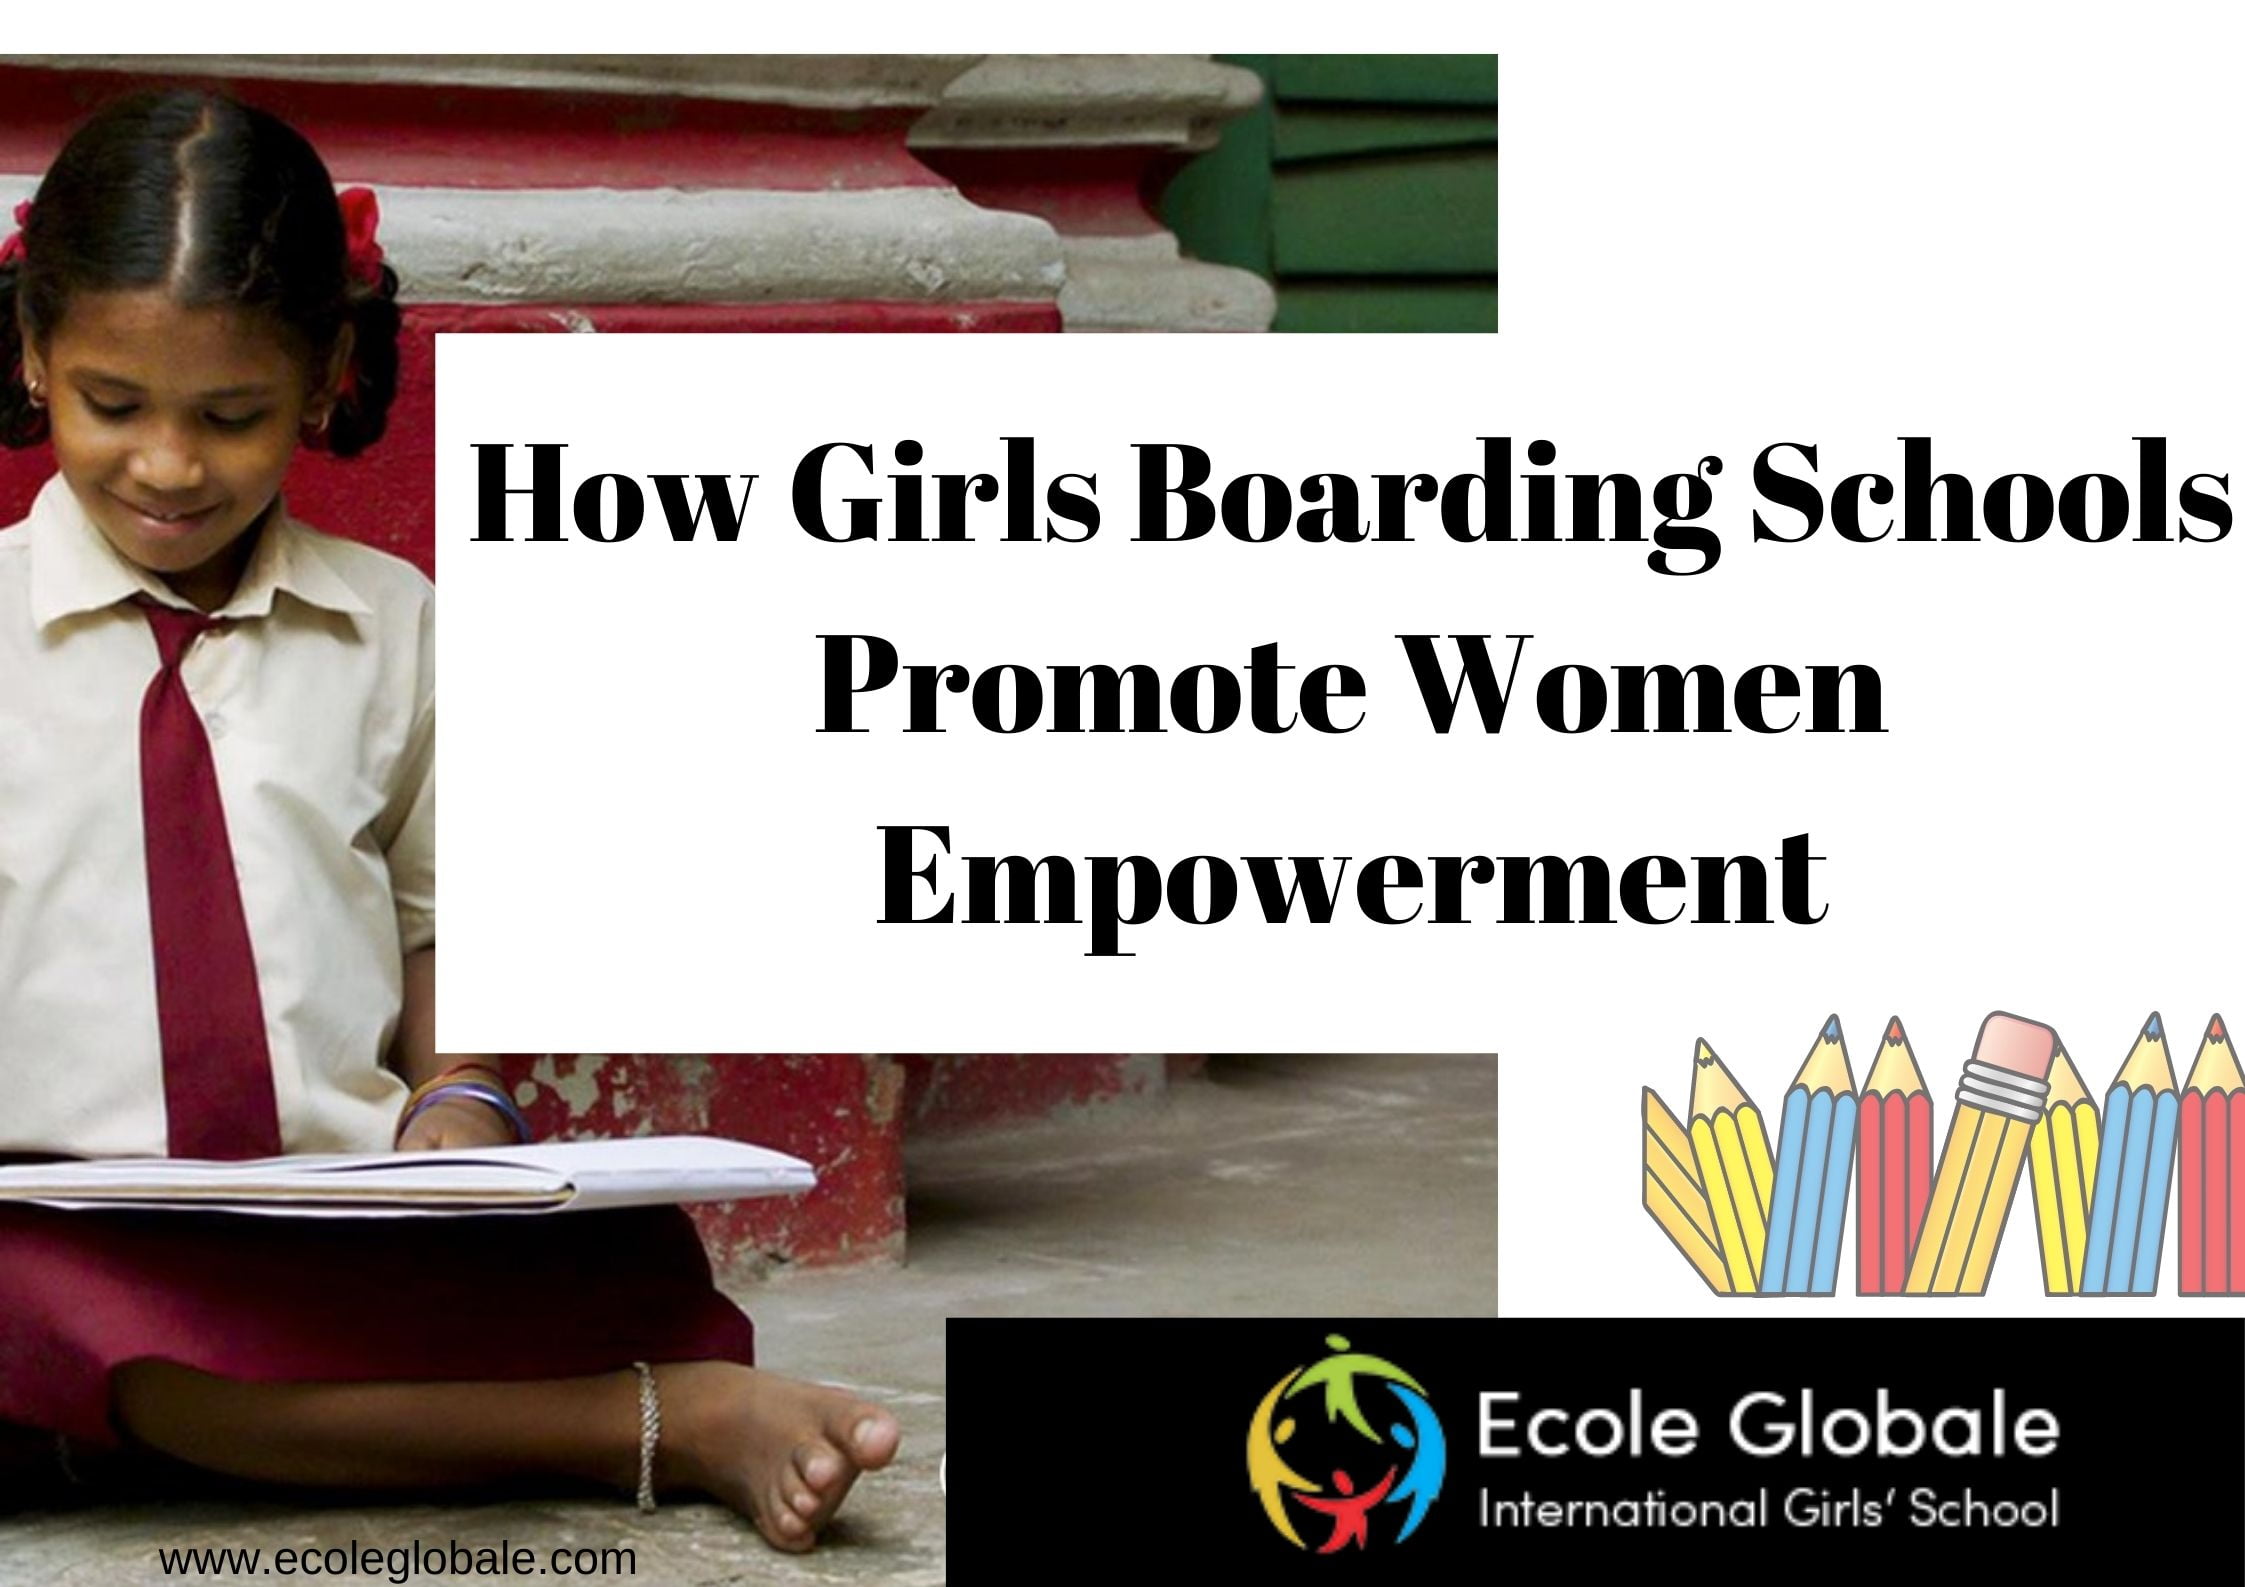 How Girls Boarding Schools Promote Women Empowerment